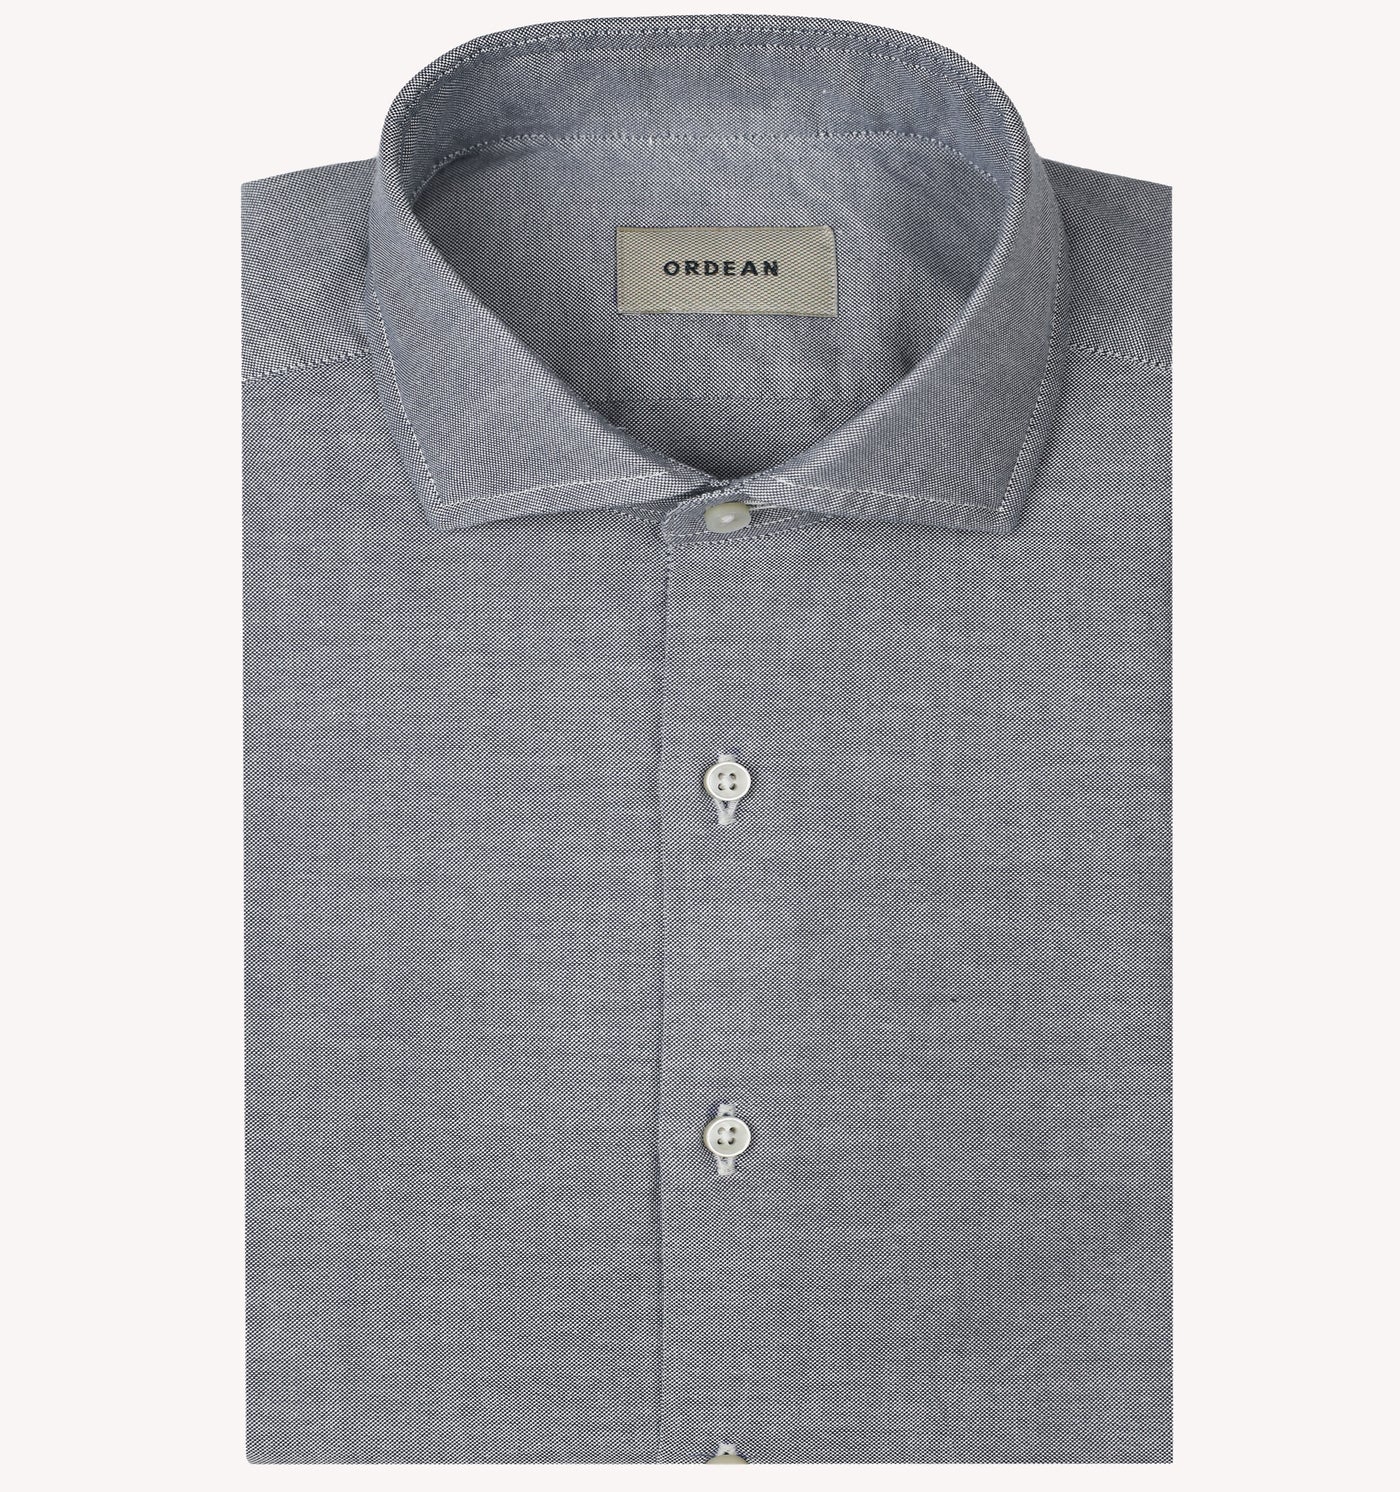 Ordean Oxford Sport Shirt in Grey